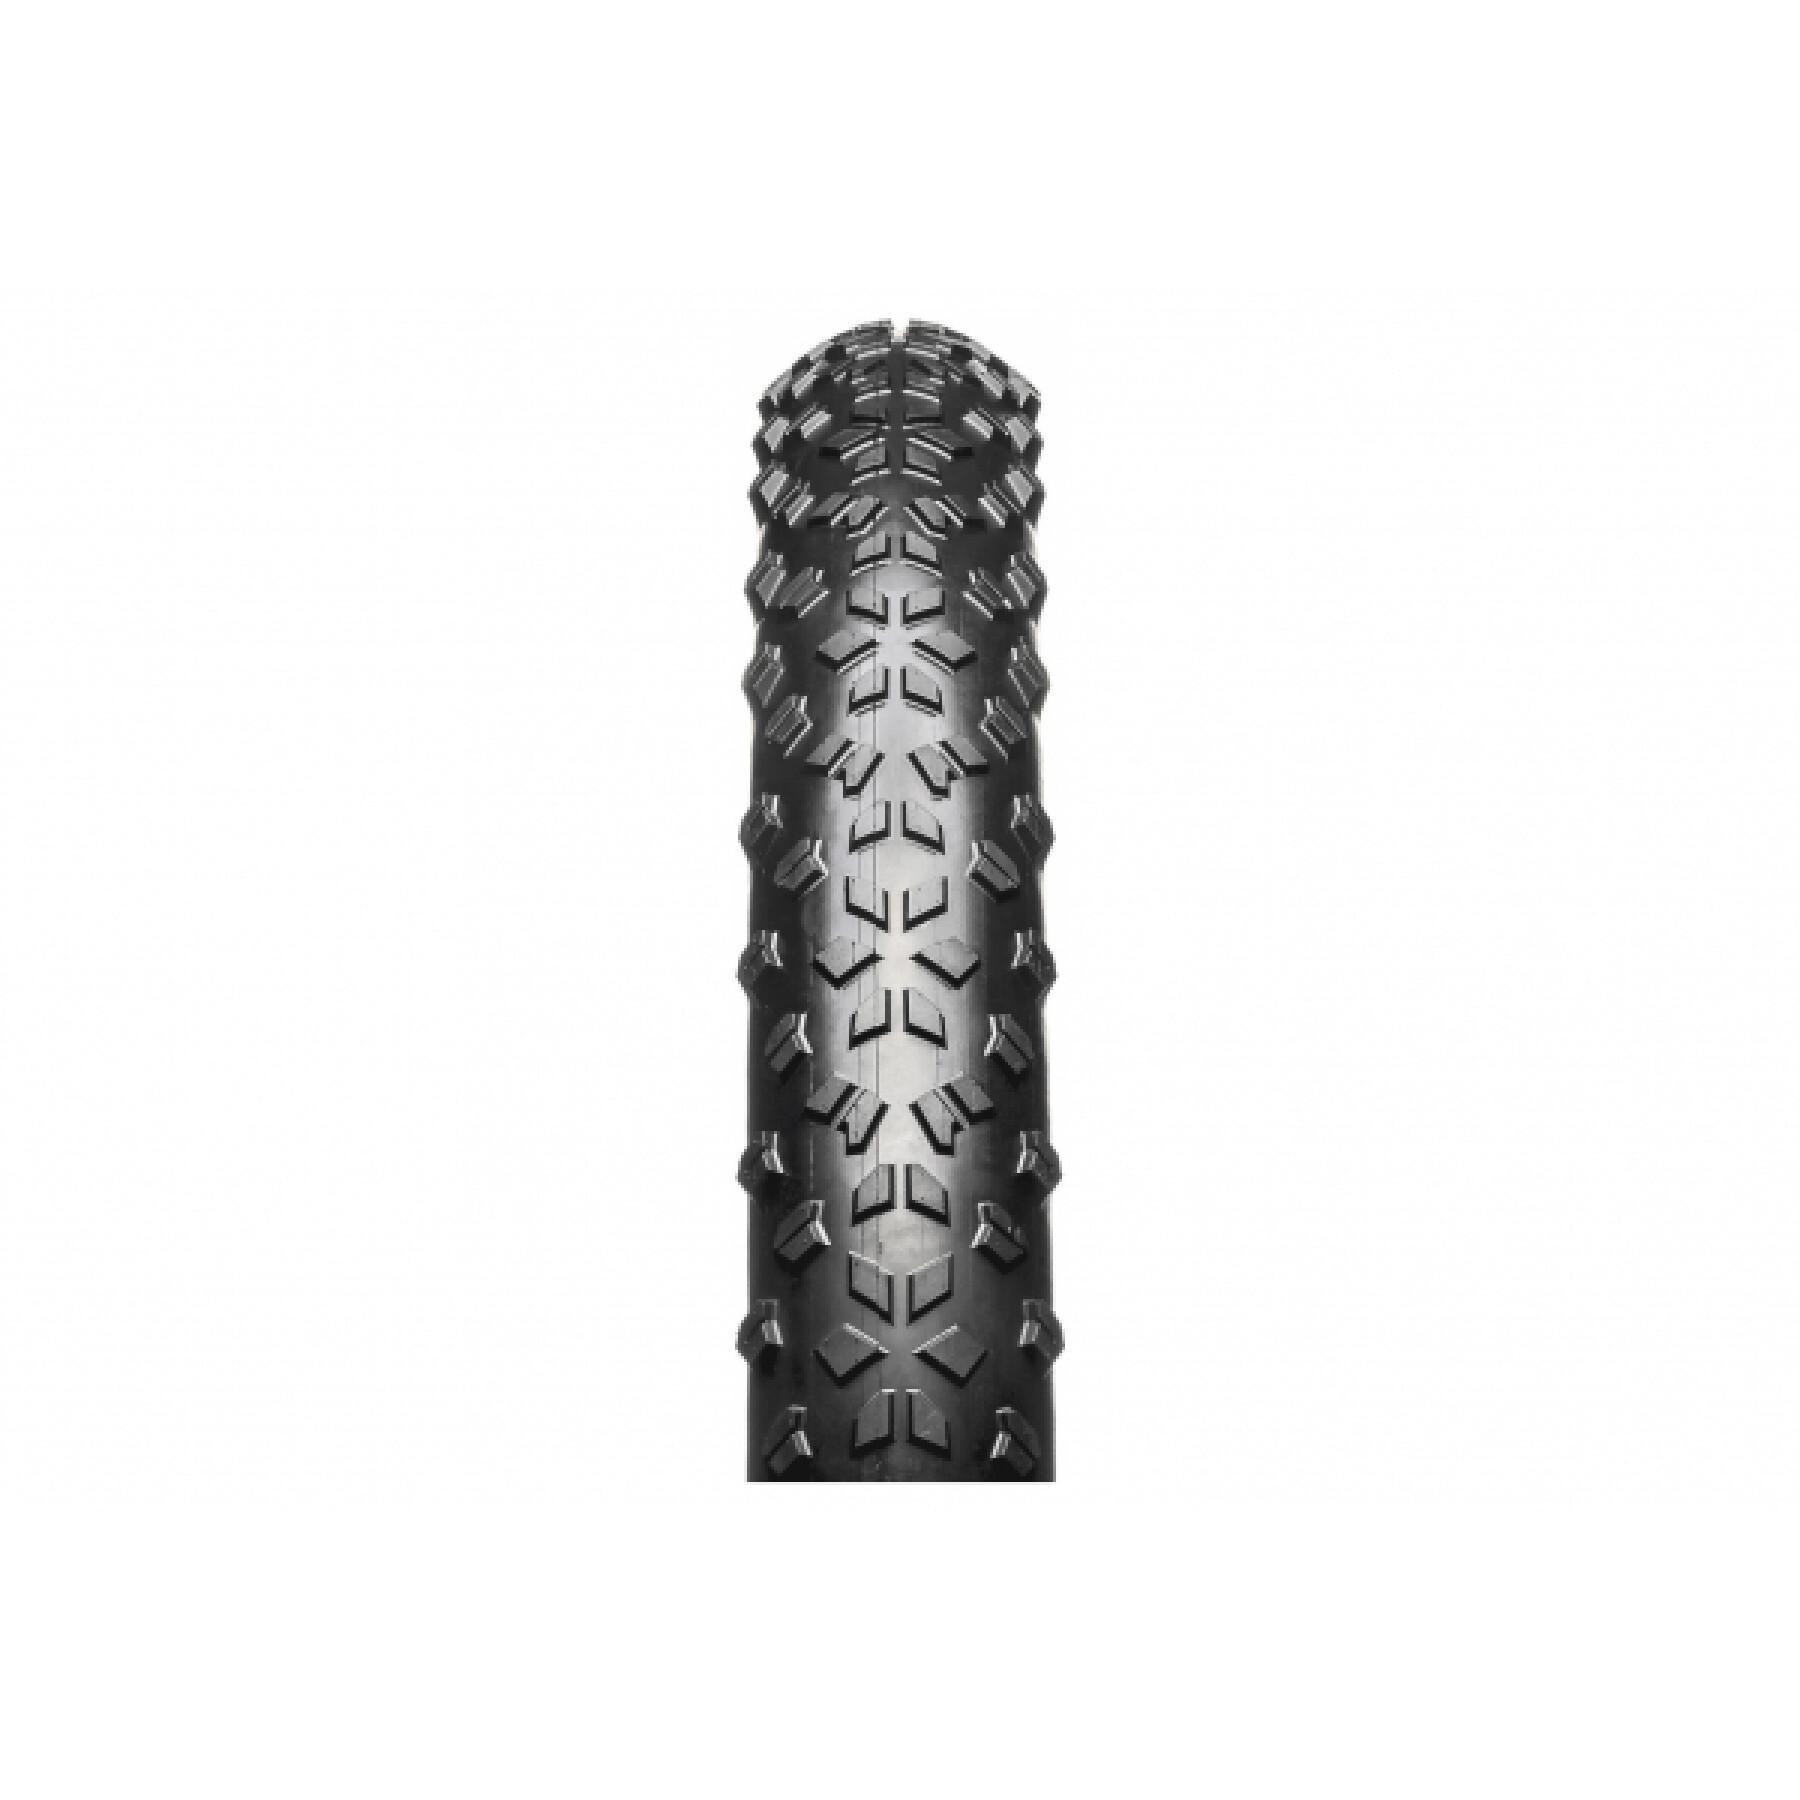 Approved gravity-vae mountain bike tire Hutchinson taipan koloss TR E50